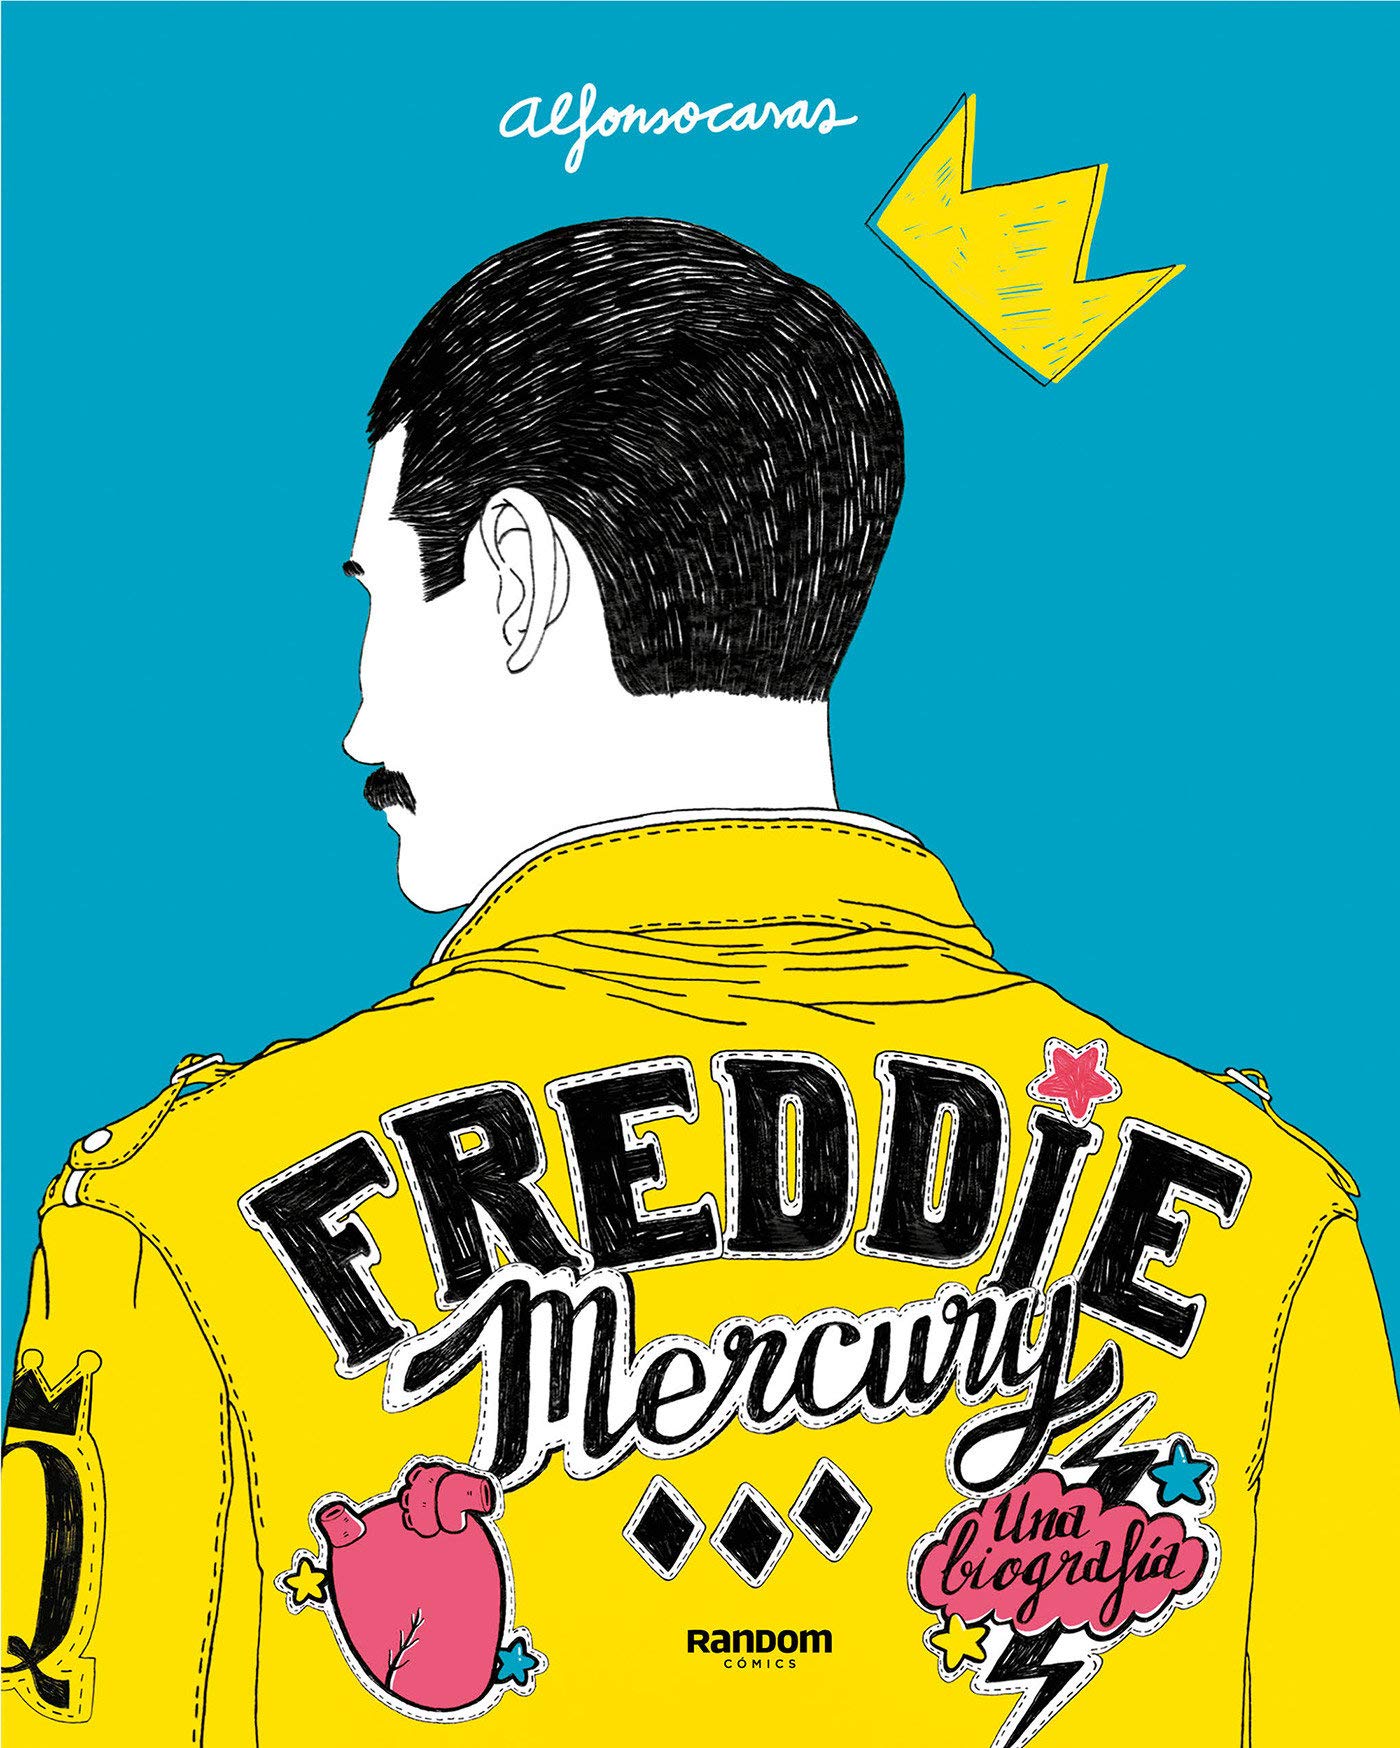 Freddie mercury spanish.